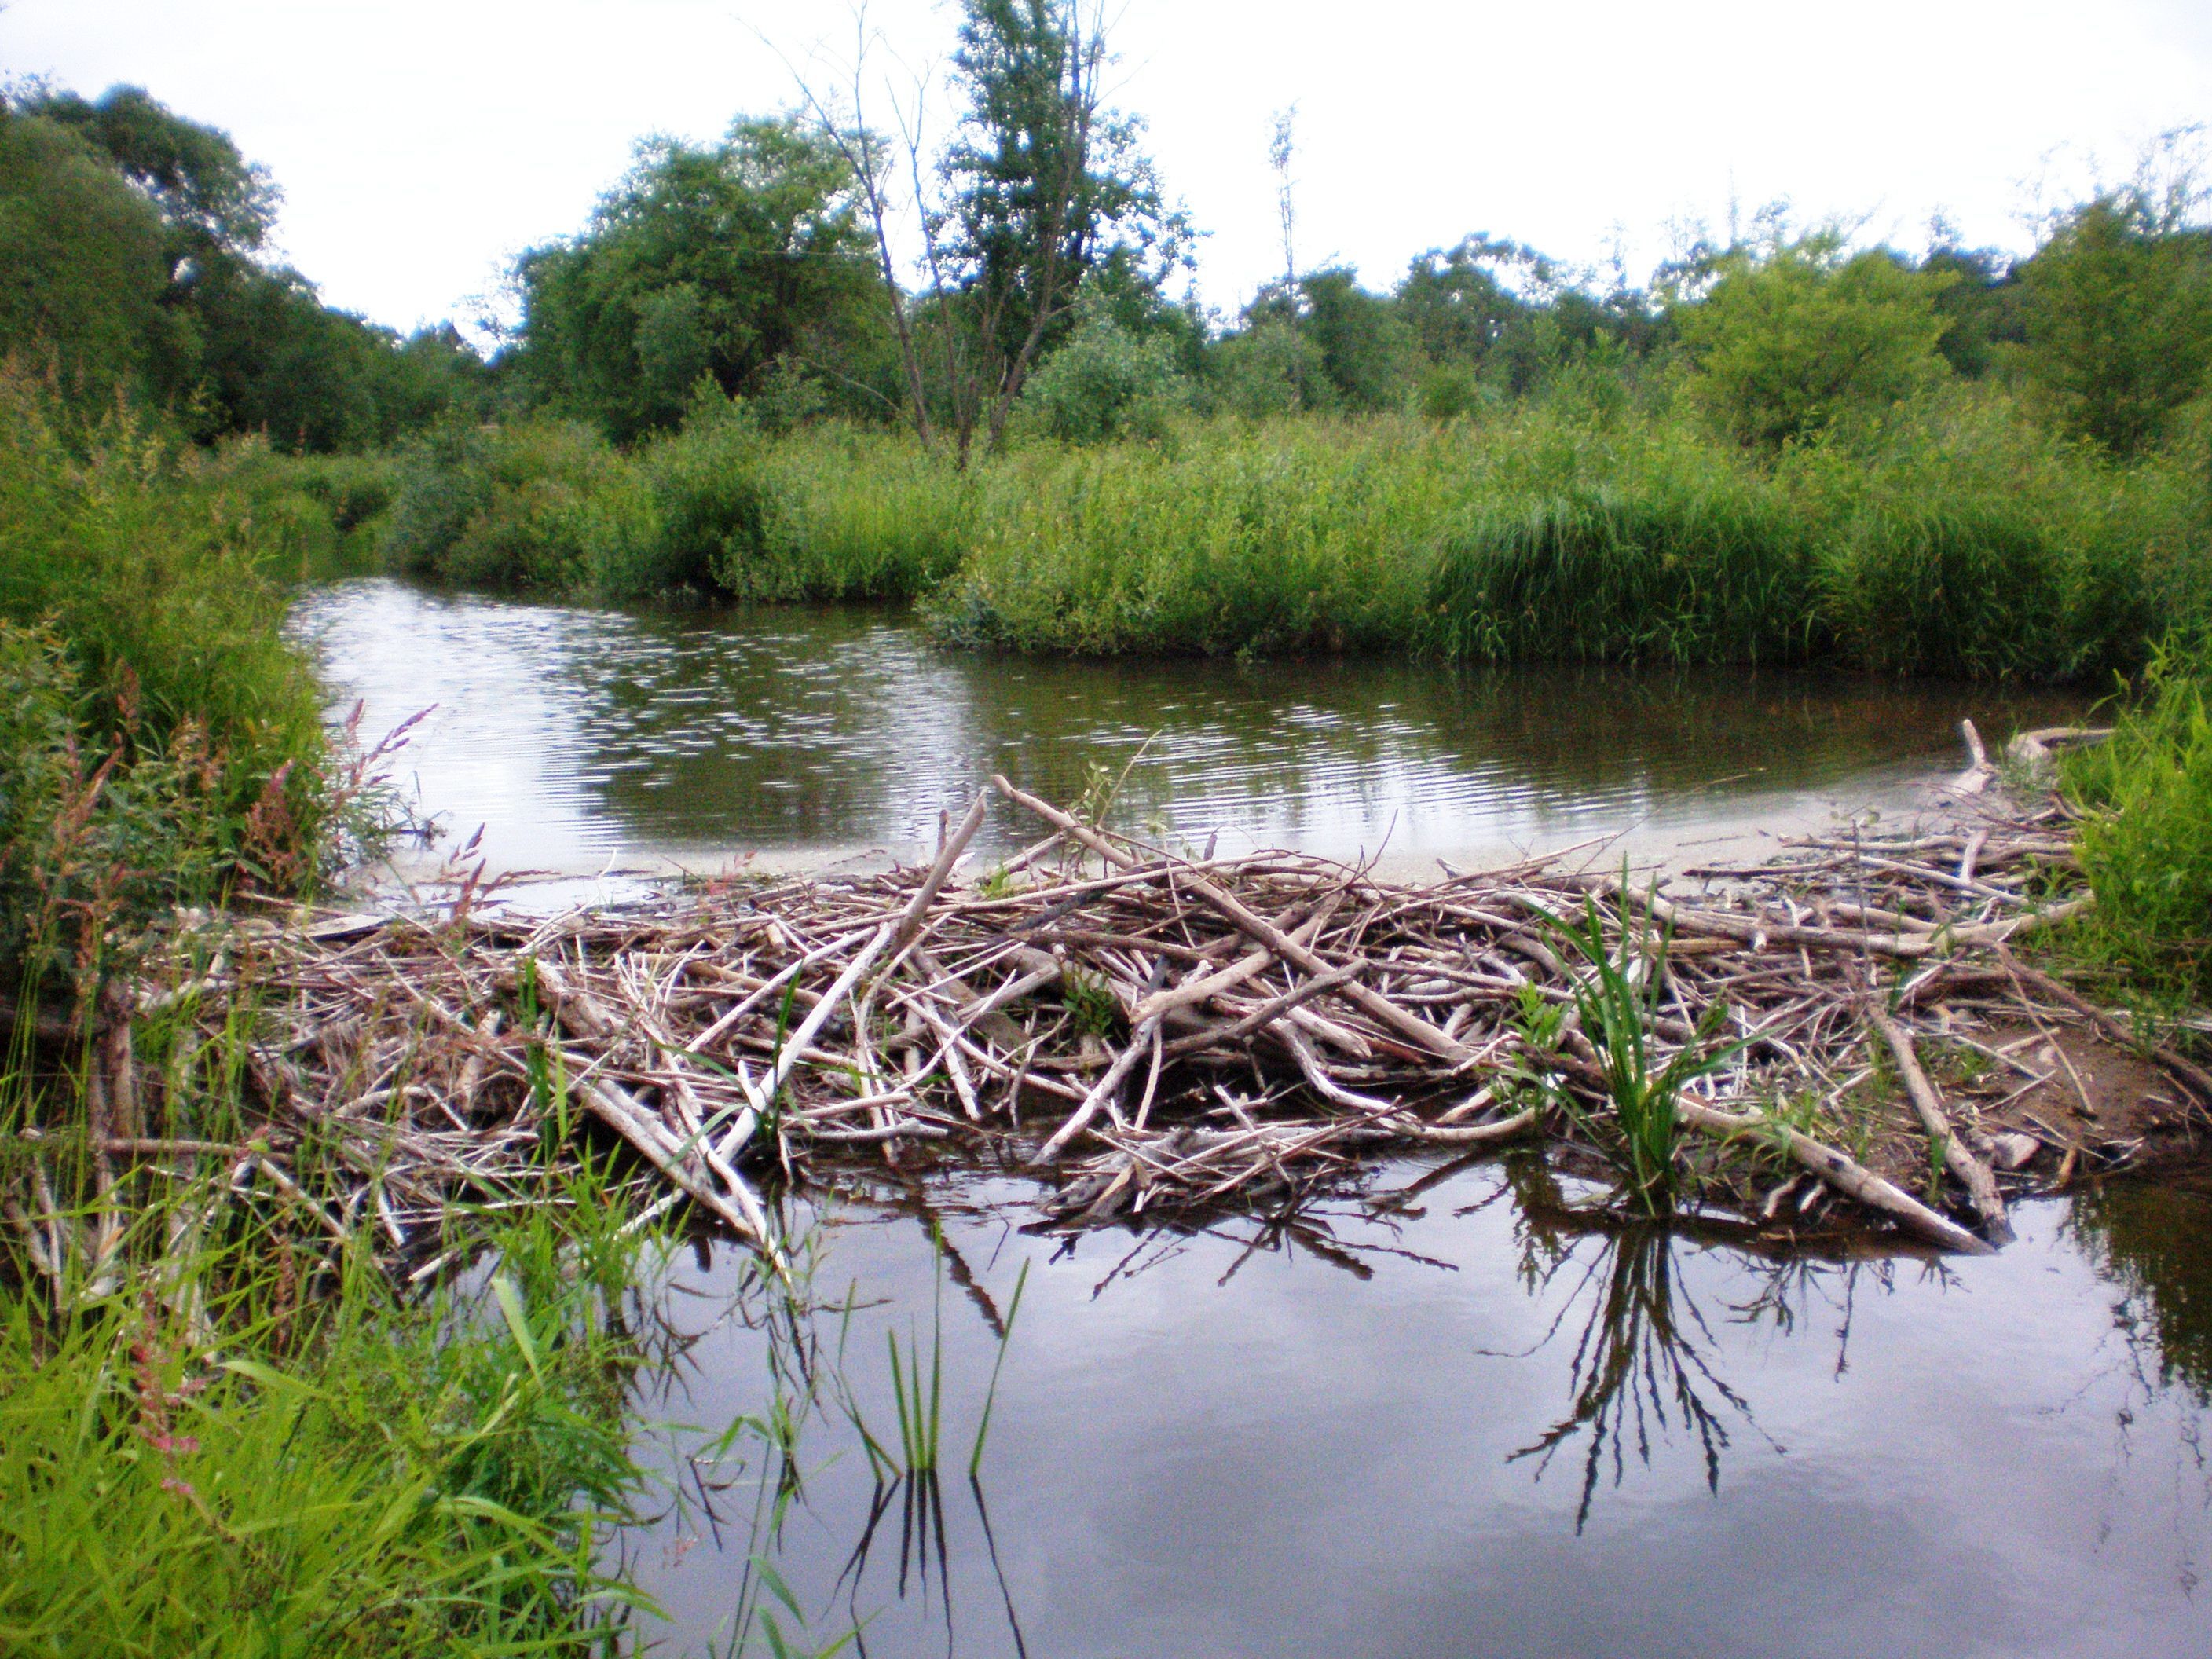 A beaver dam on the Smilga River. Image credit: Hugo.arg, CC by 4.0